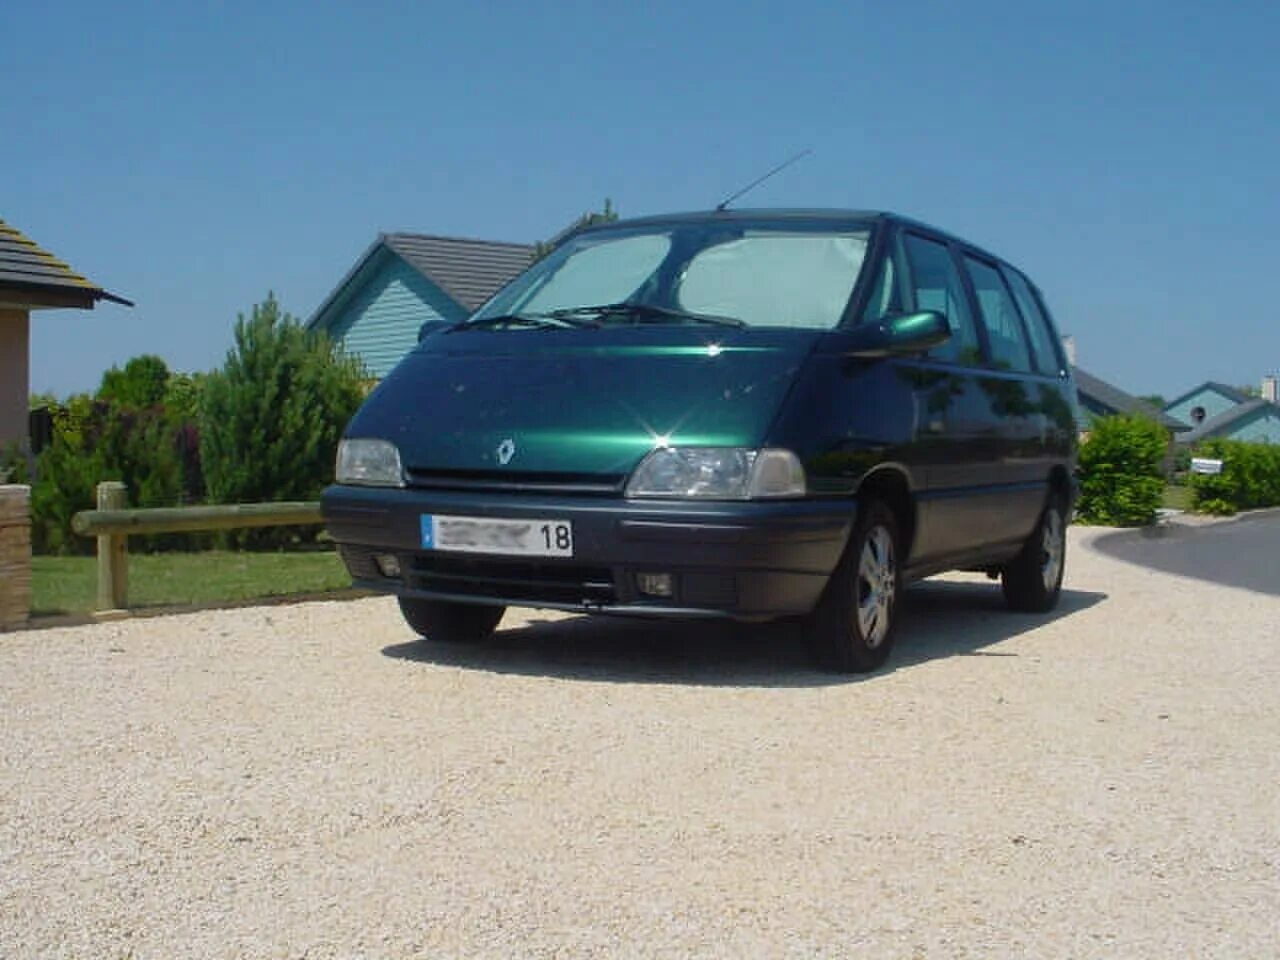 Renault Espace 2. Рено Эспейс 2.2. Рено Эспейс 1993. Рено Эспейс 1 Квадра. Рено эспейс дизель куплю